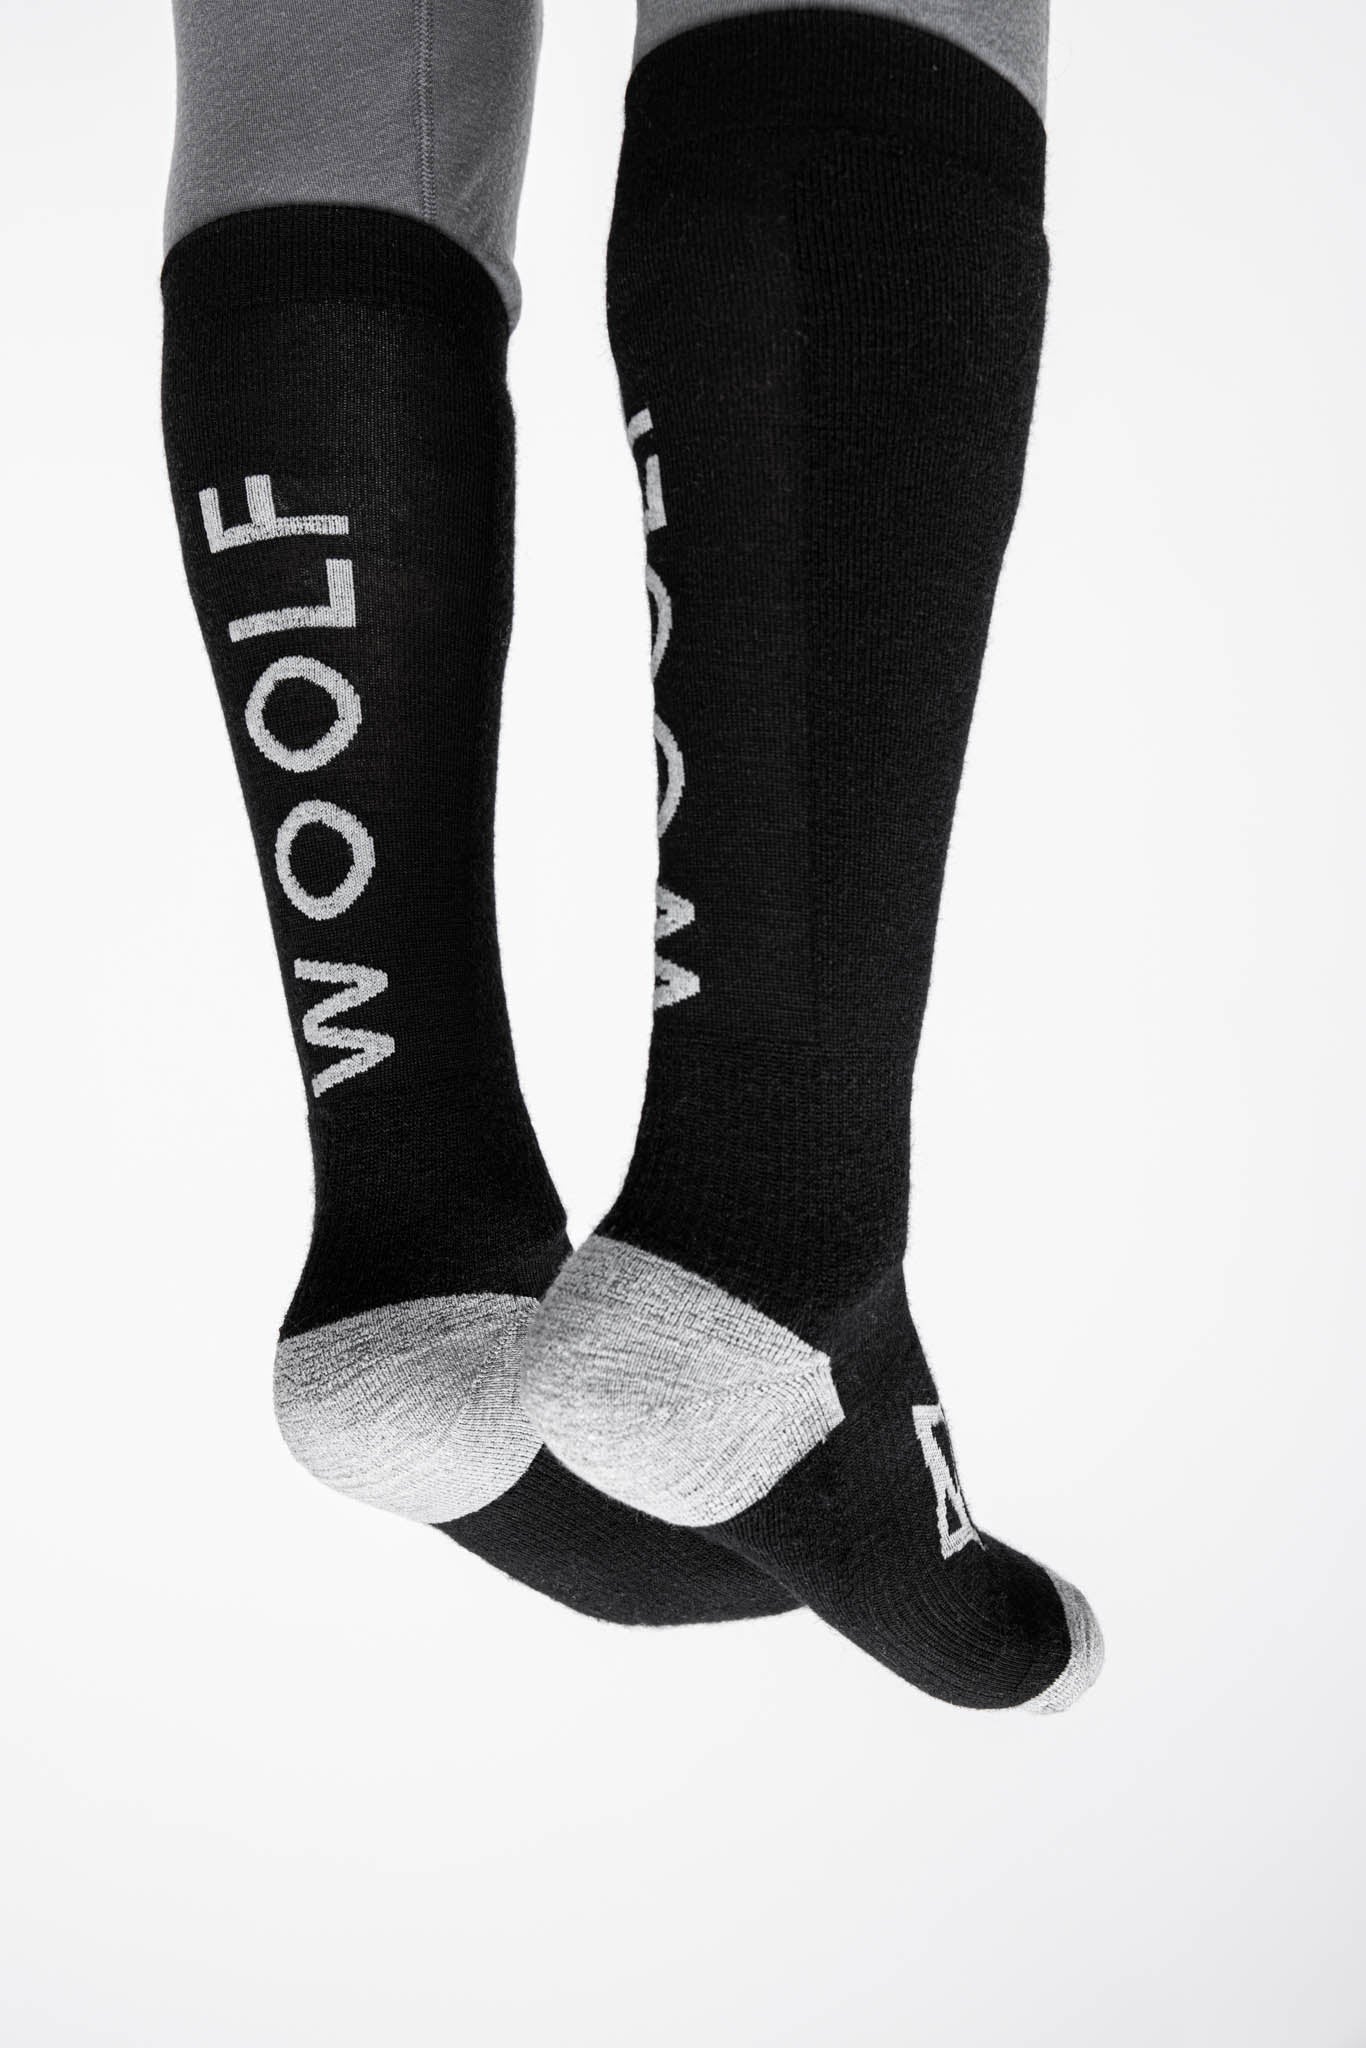 Ulsaak Tech Sock | Woolf Merino | 100% Merino wool base layers